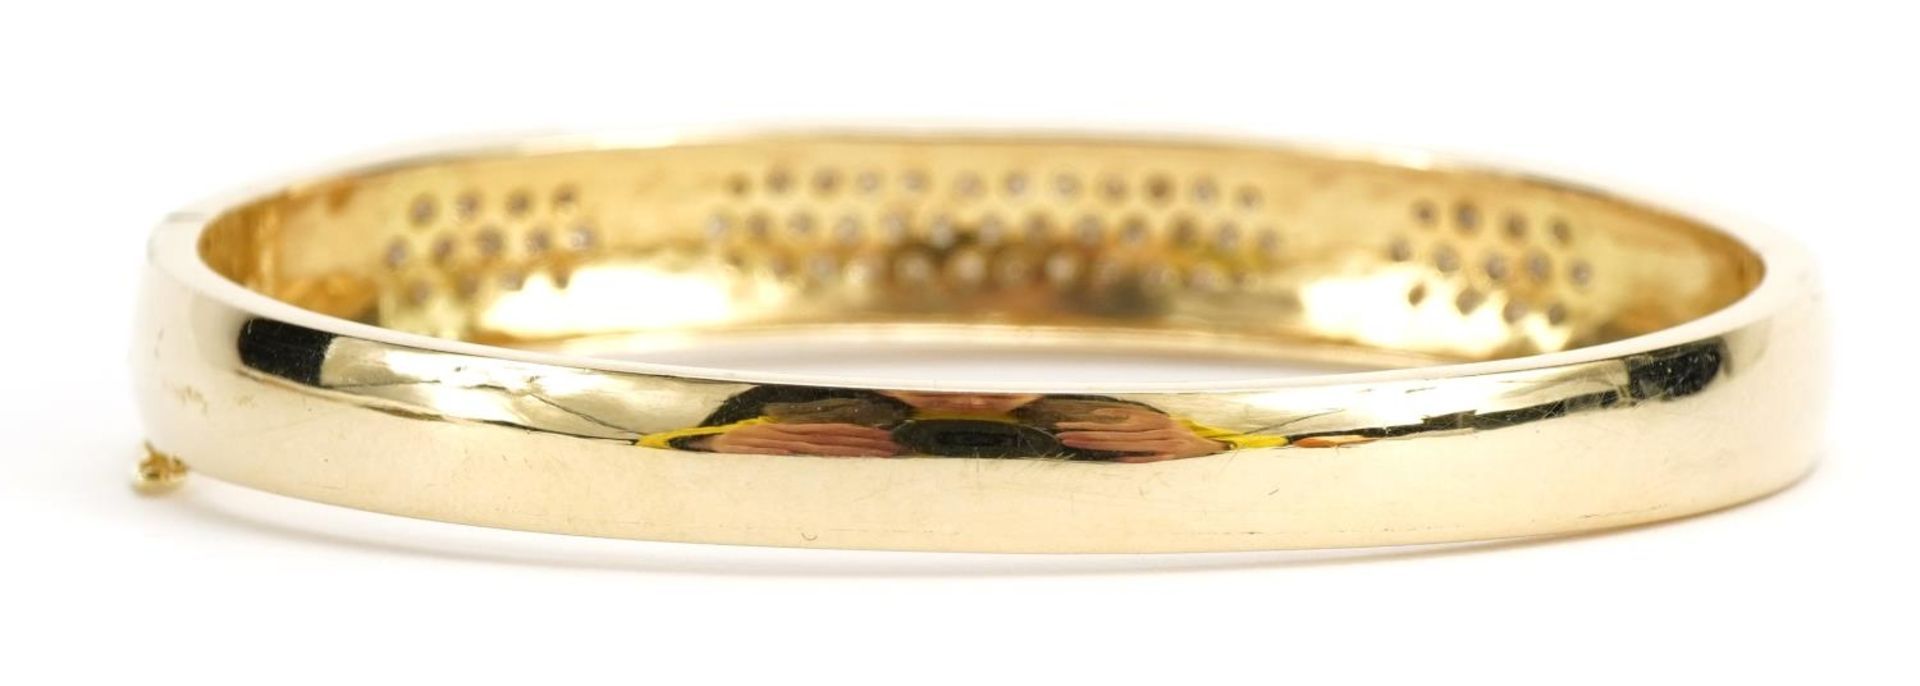 14k gold hinged bangle set with diamonds, 6.6cm wide, 23.7g - Image 2 of 3